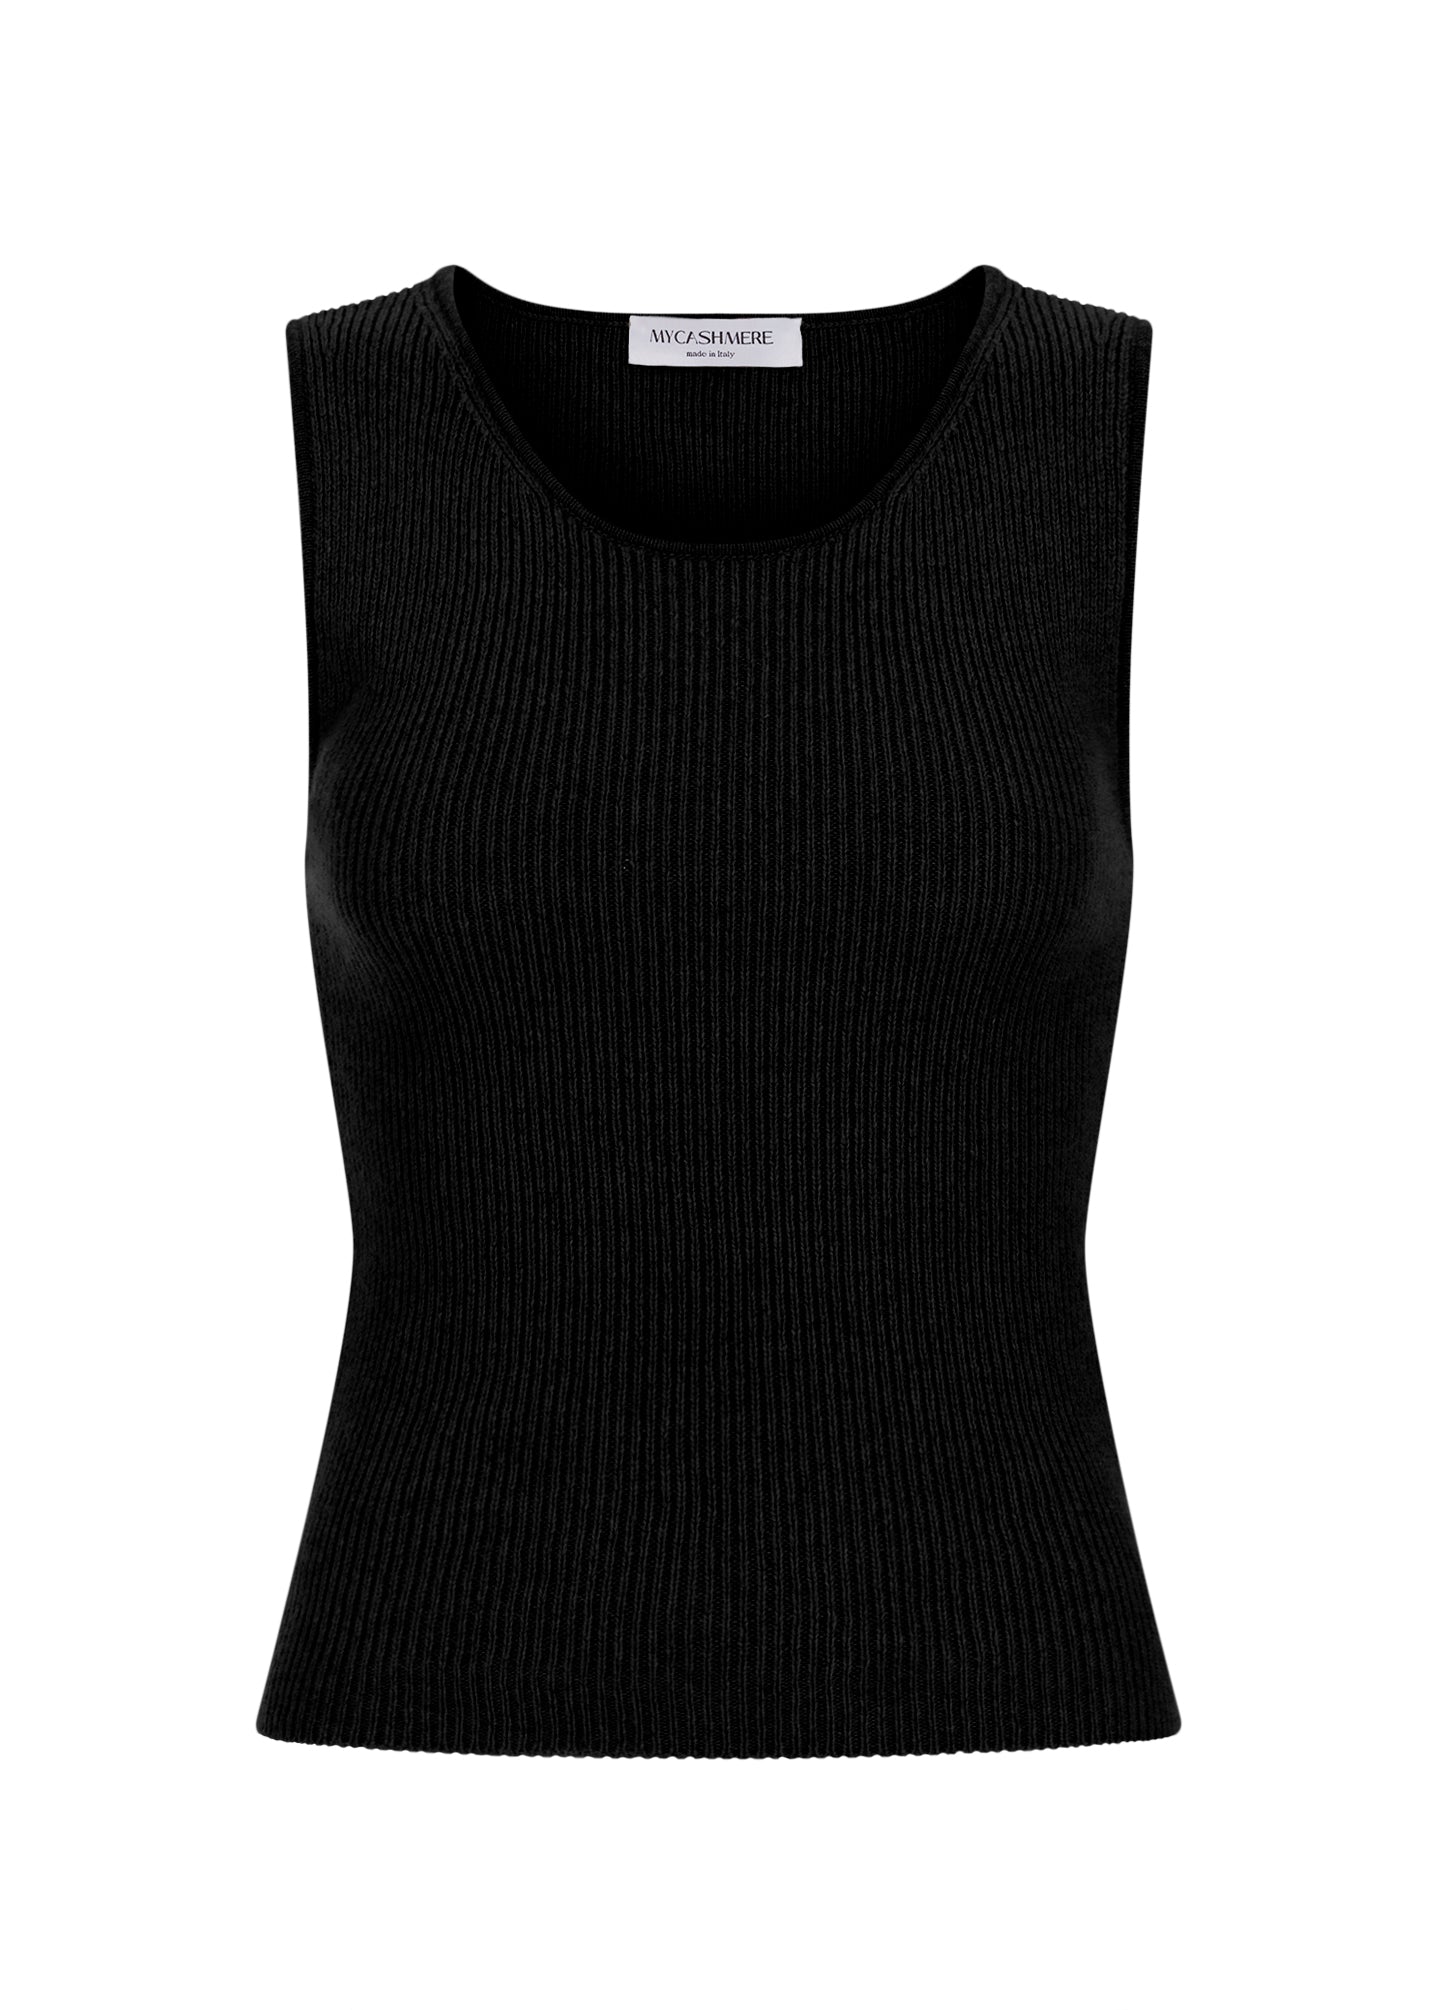 Women's cashmere tank top Black